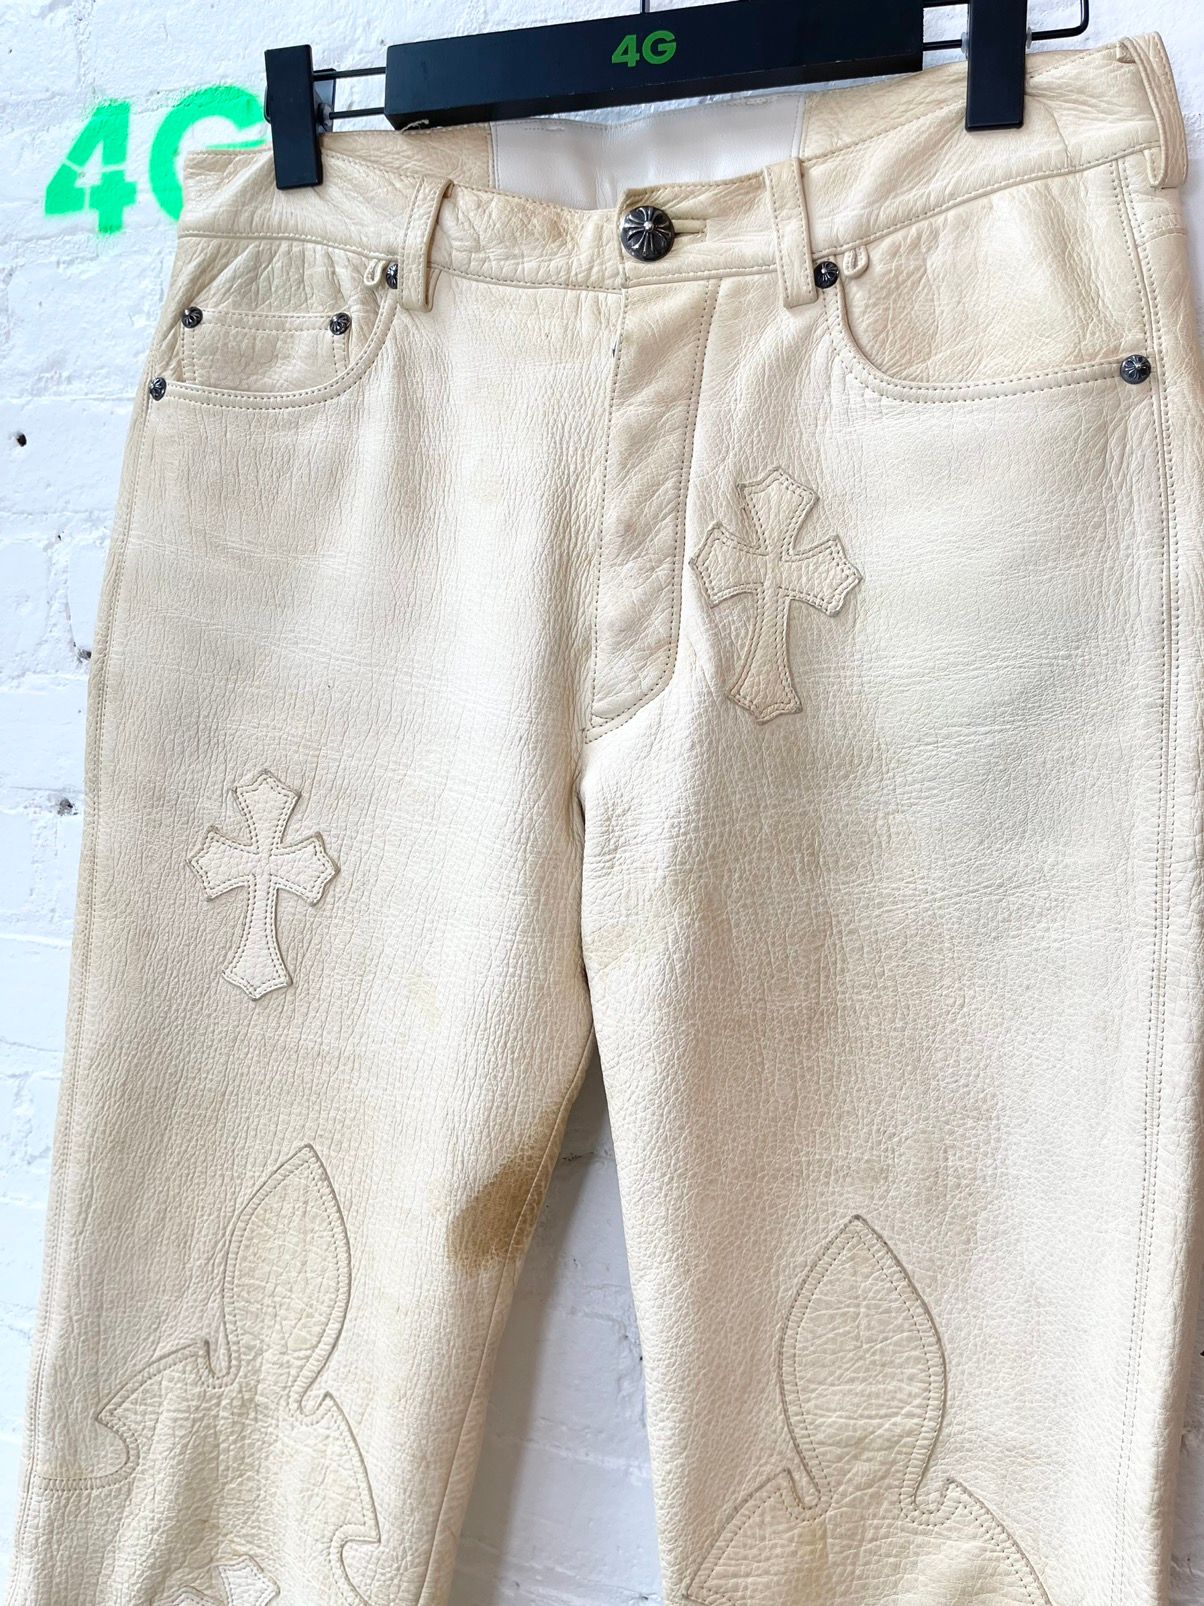 Chrome Hearts BLOODY OSIRIS Leather Cross Jeans Pants